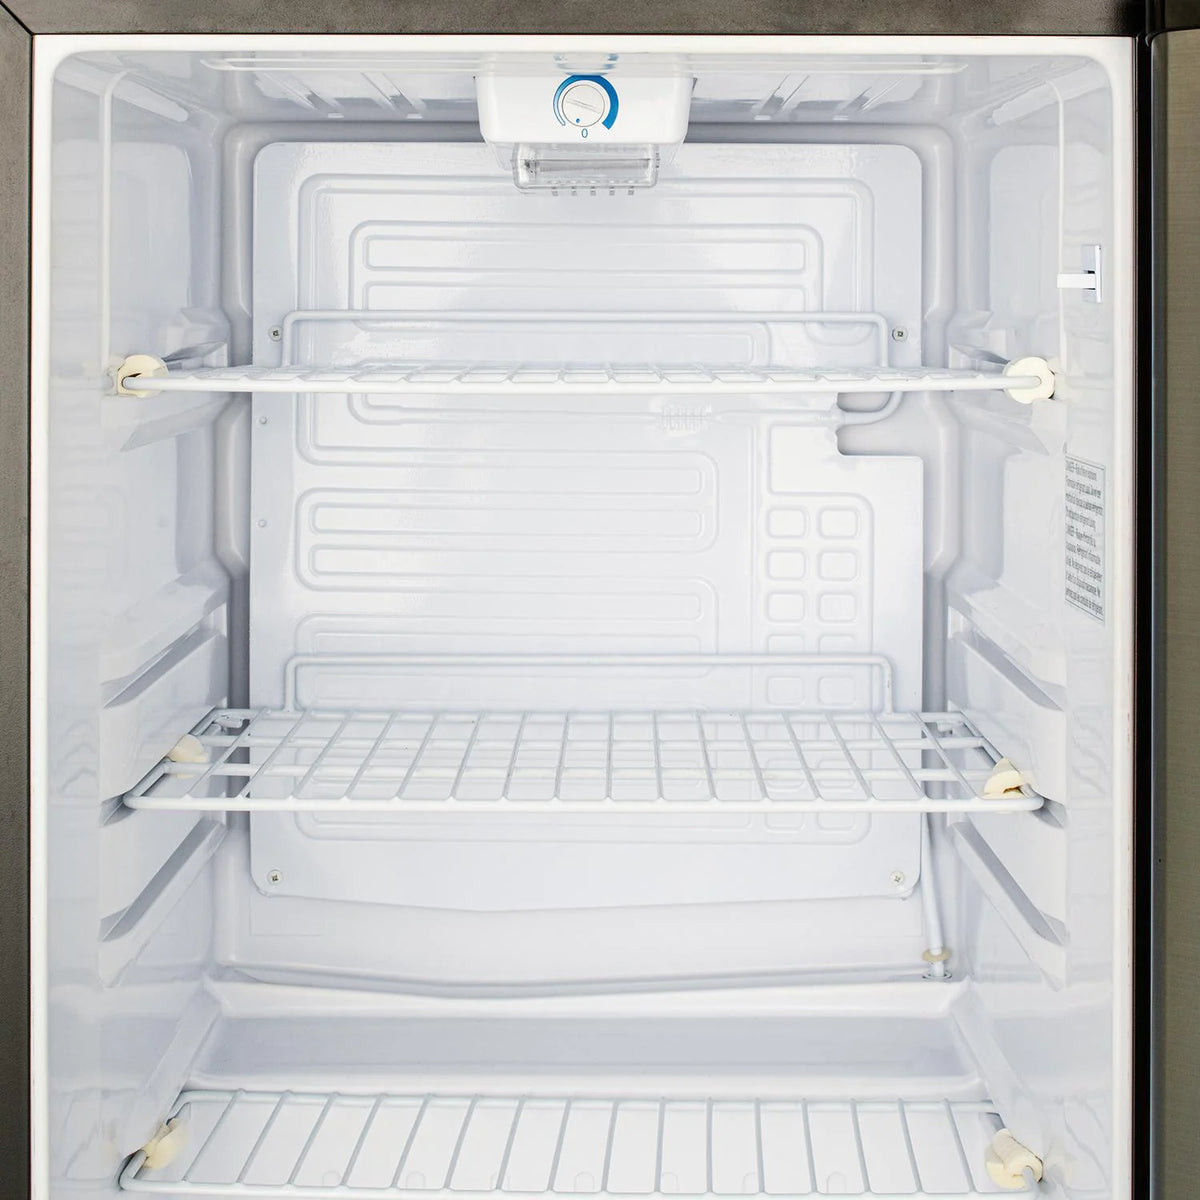 Blaze 20 Inch Outdoor Compact Refrigerator Inside View